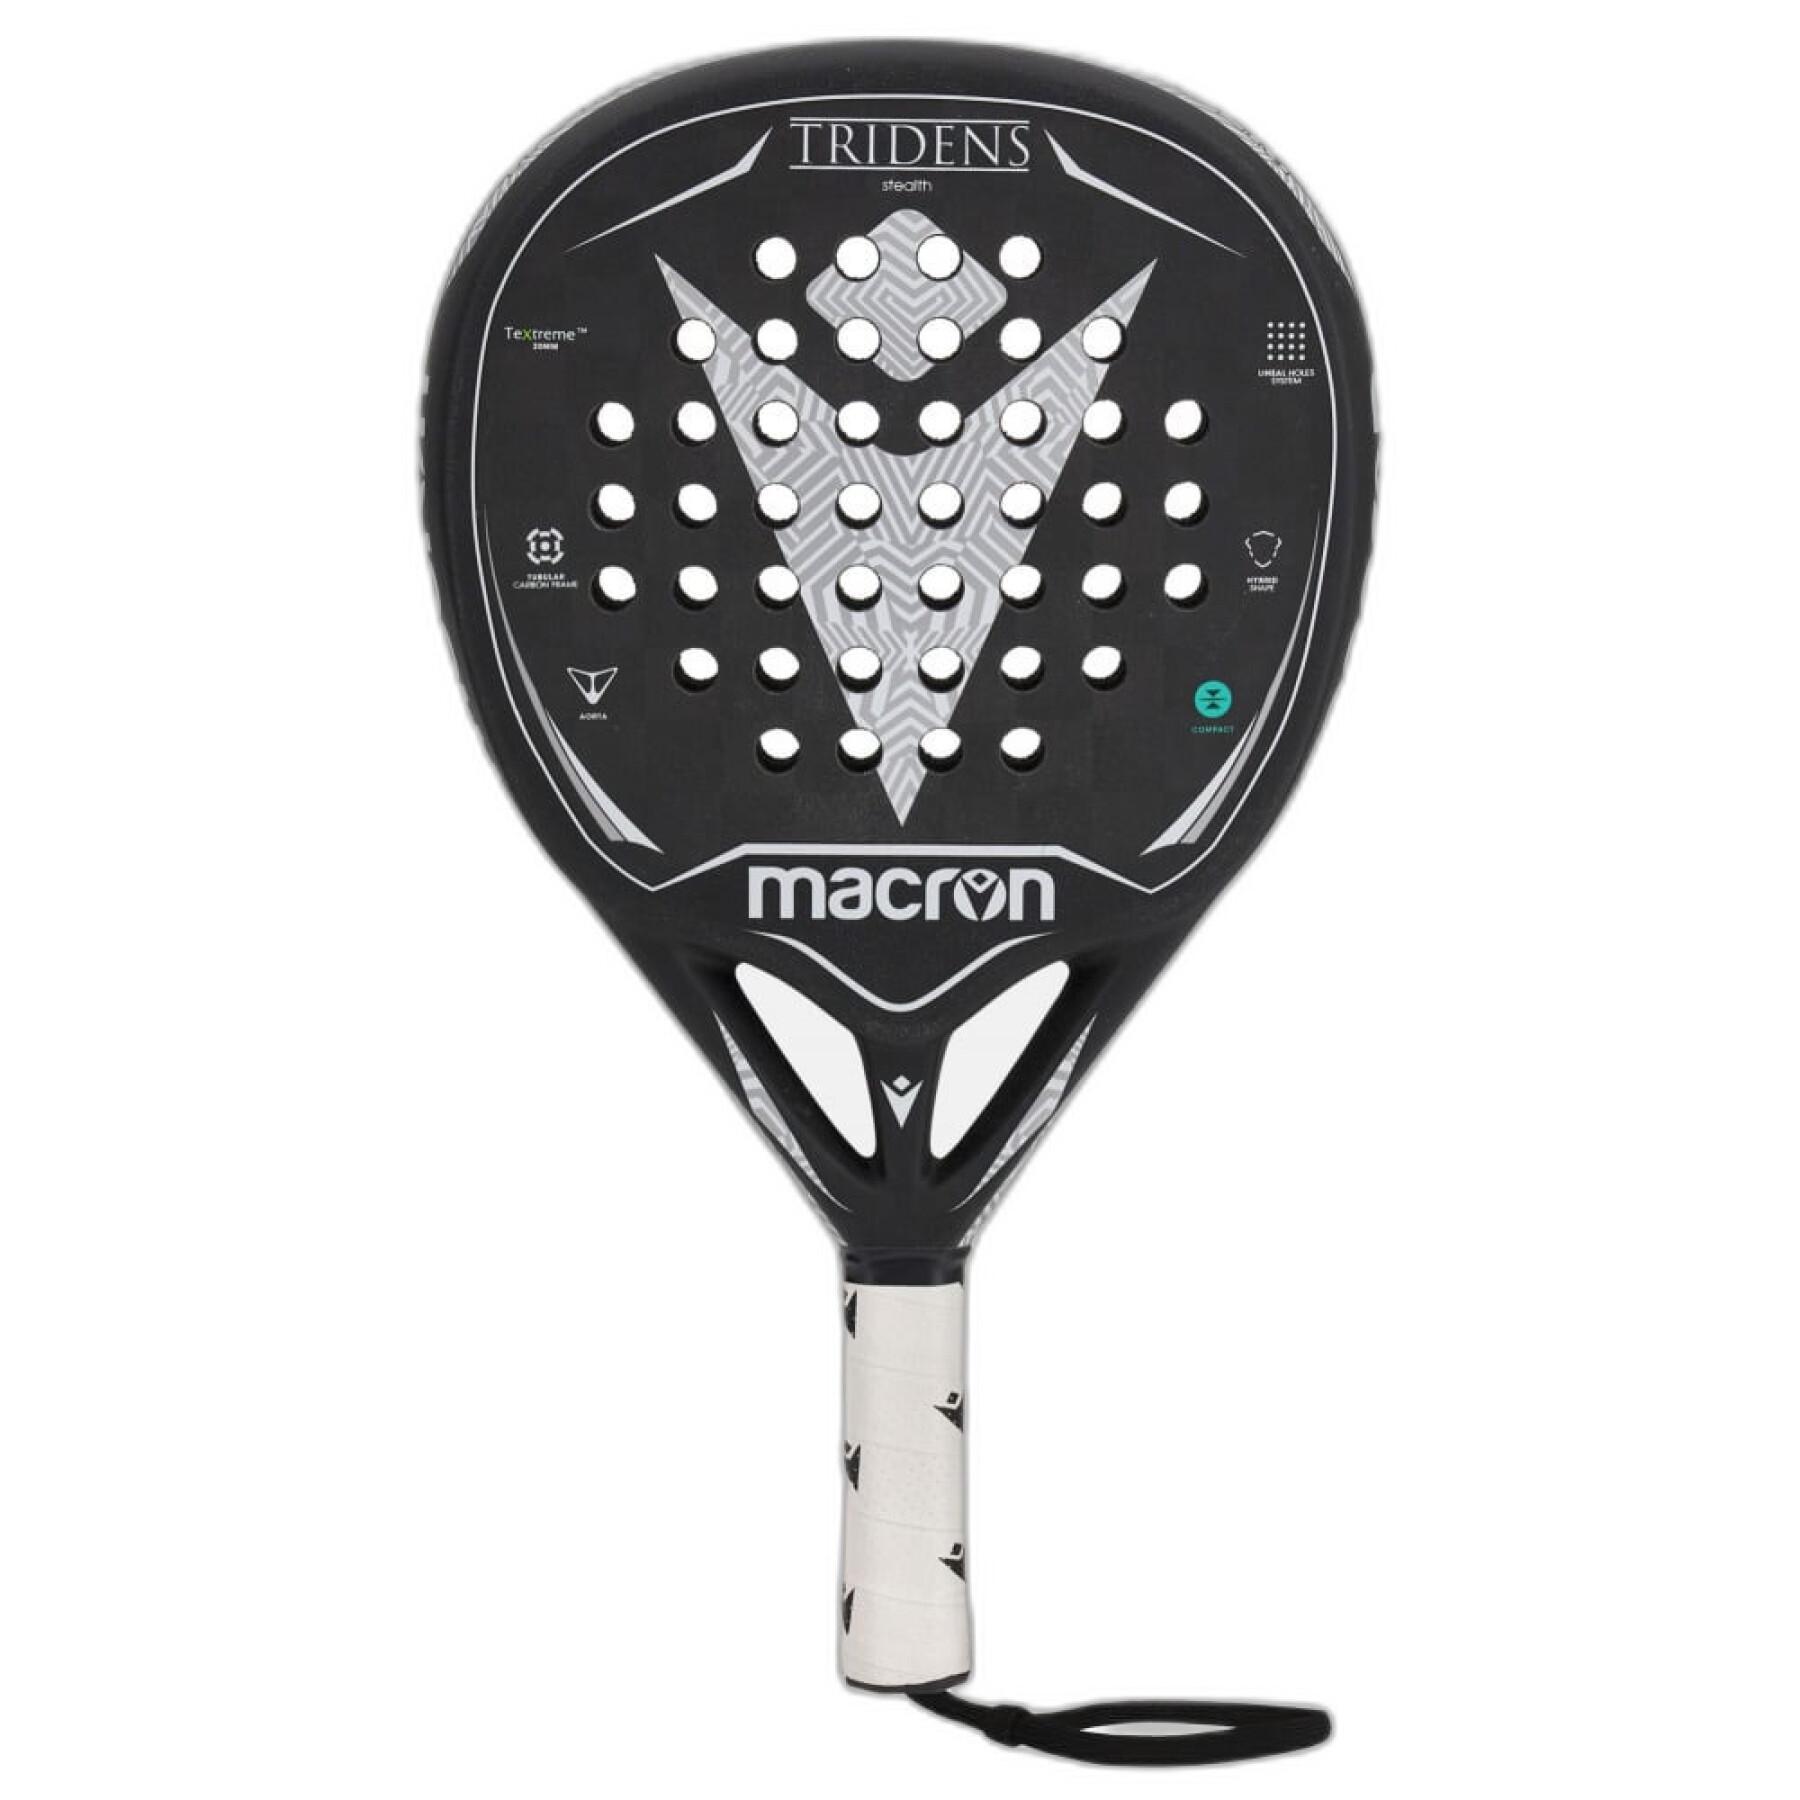 Paddle racket Macron Prime CC Tridens Stealth Pro